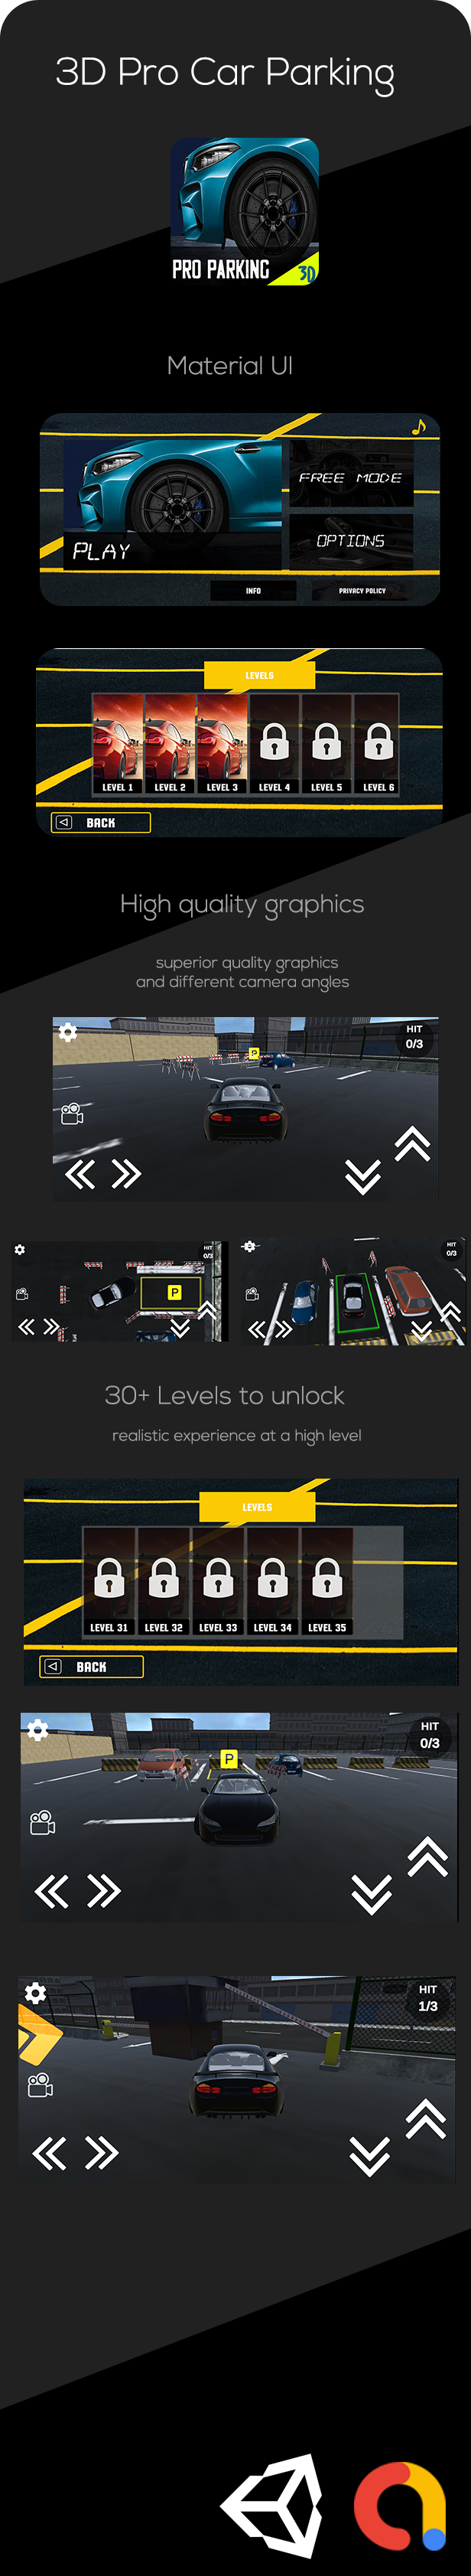 Pro Car Parking 3D - Parking Car Simulator ( Admob - Unity3d - Android - iOs ) - 1